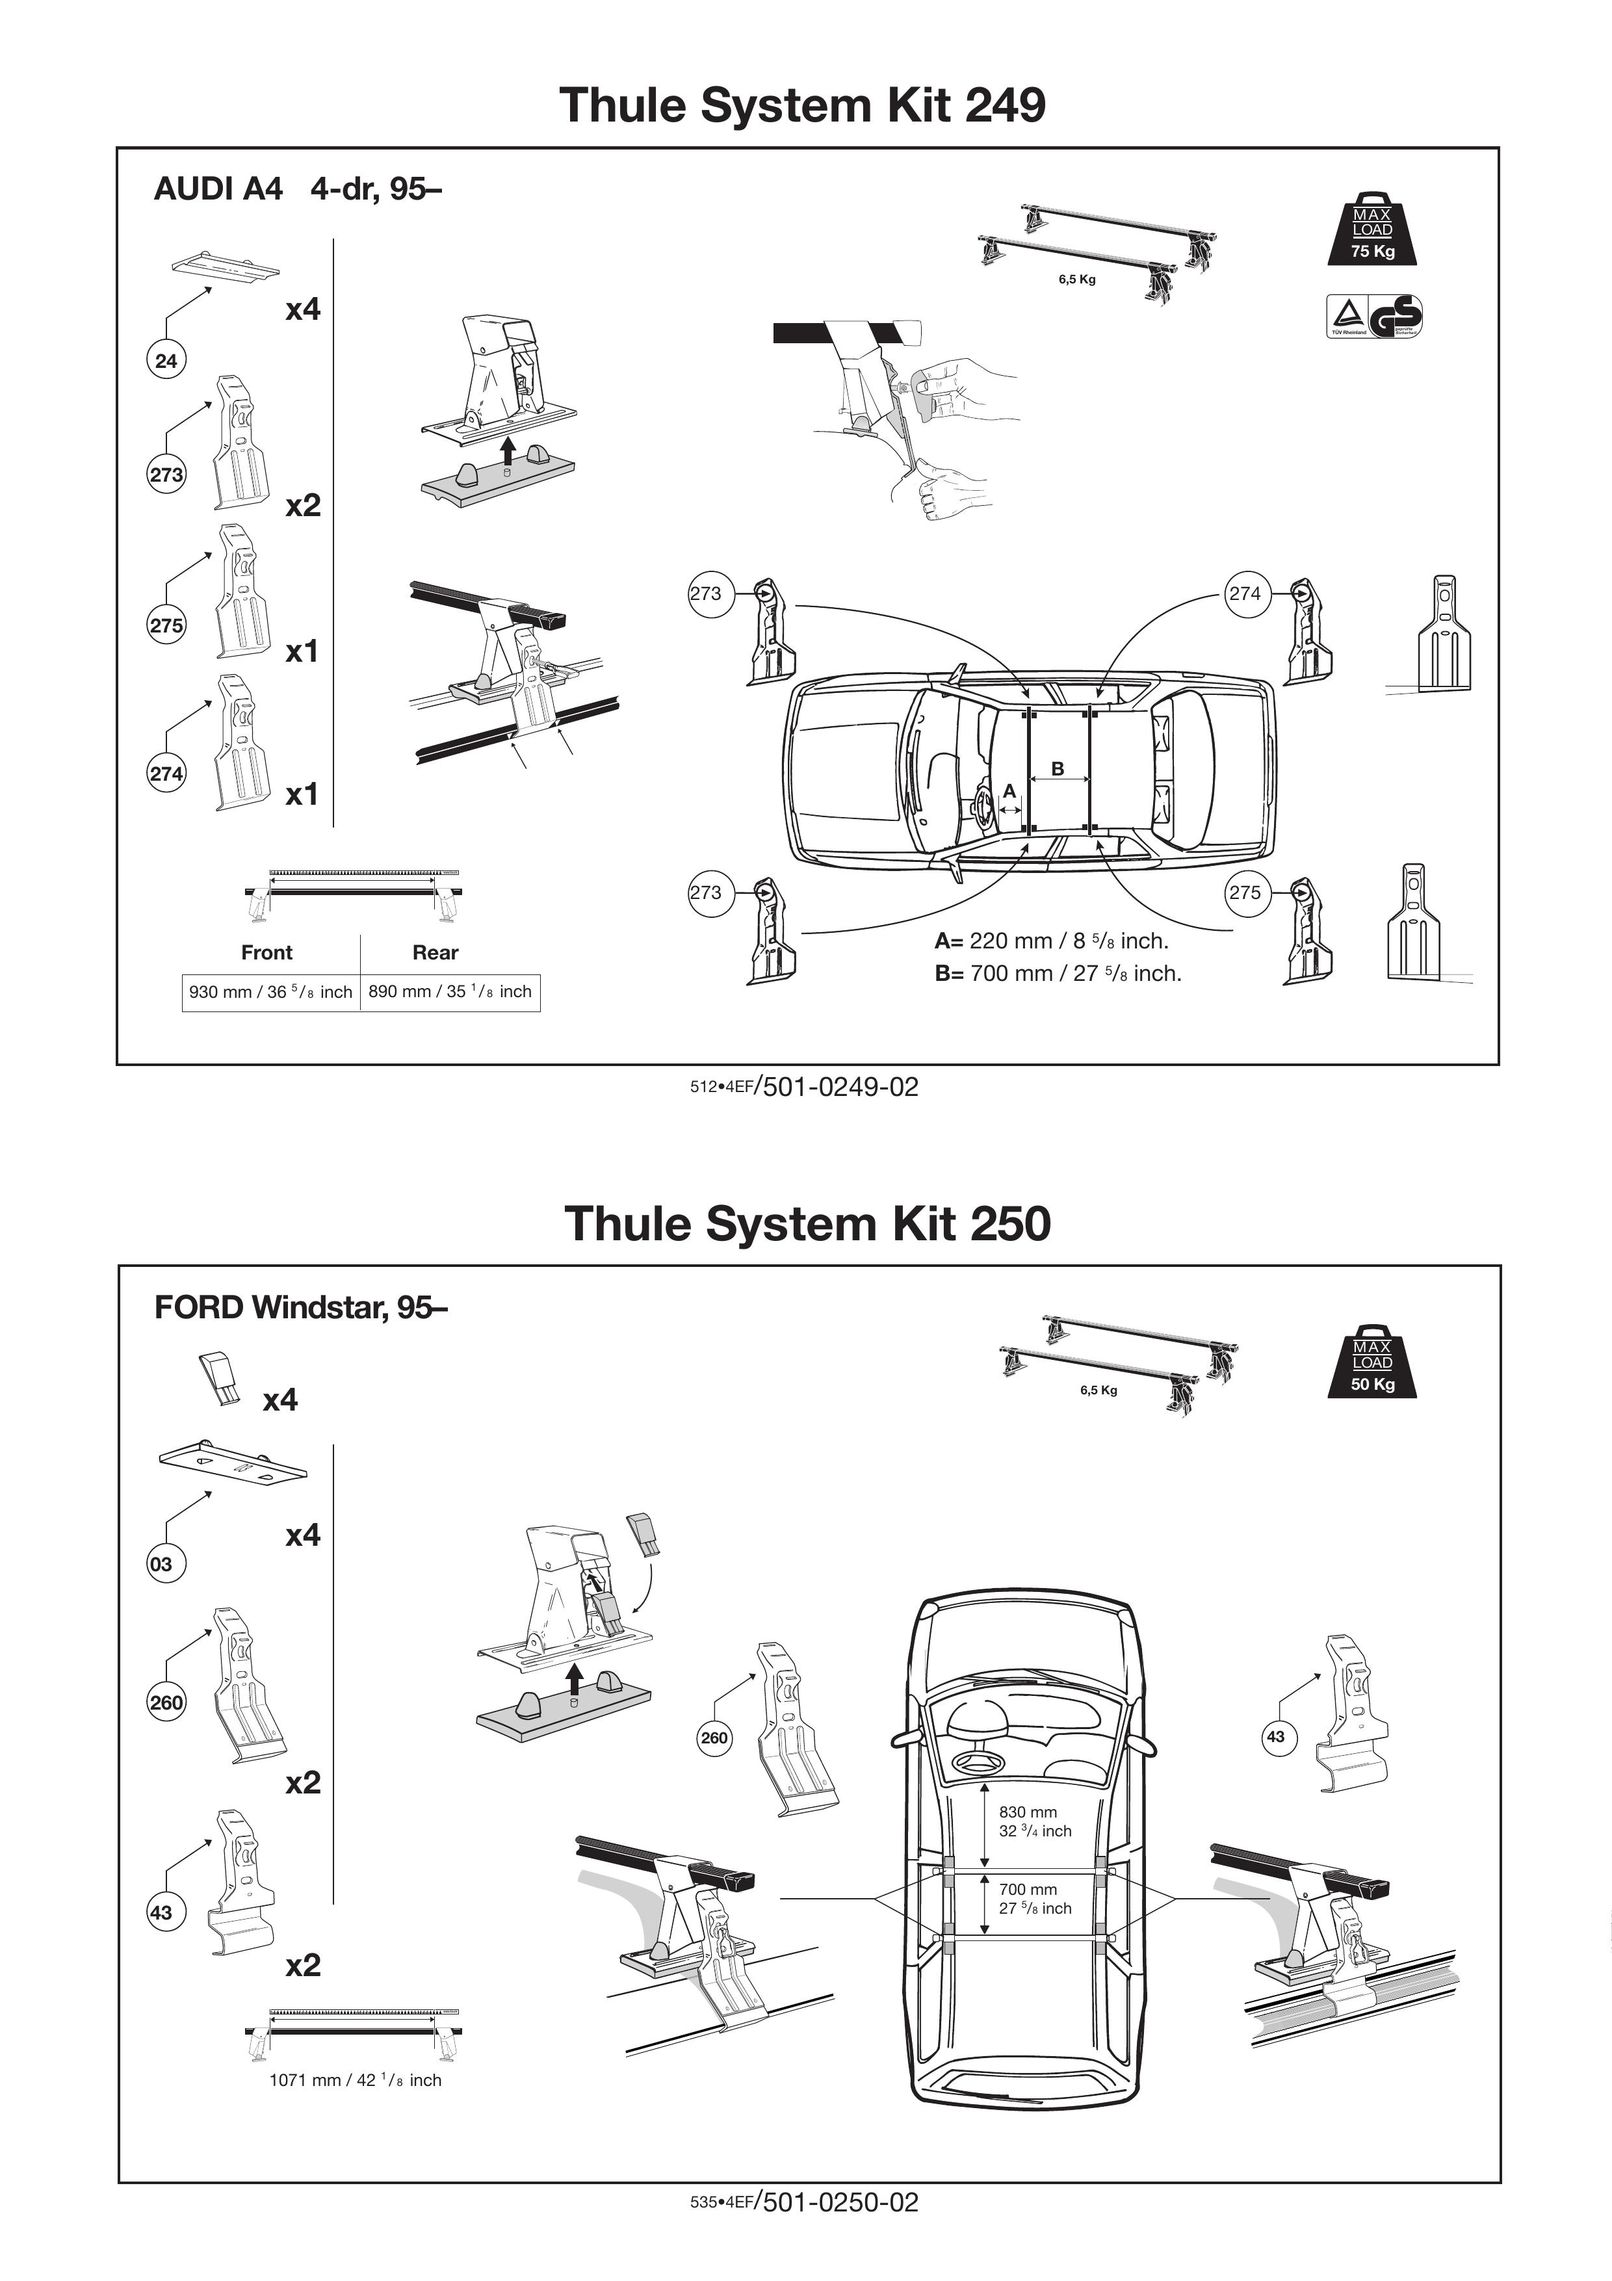 Audi 5124EF/501-0249-02 Bike Rack User Manual